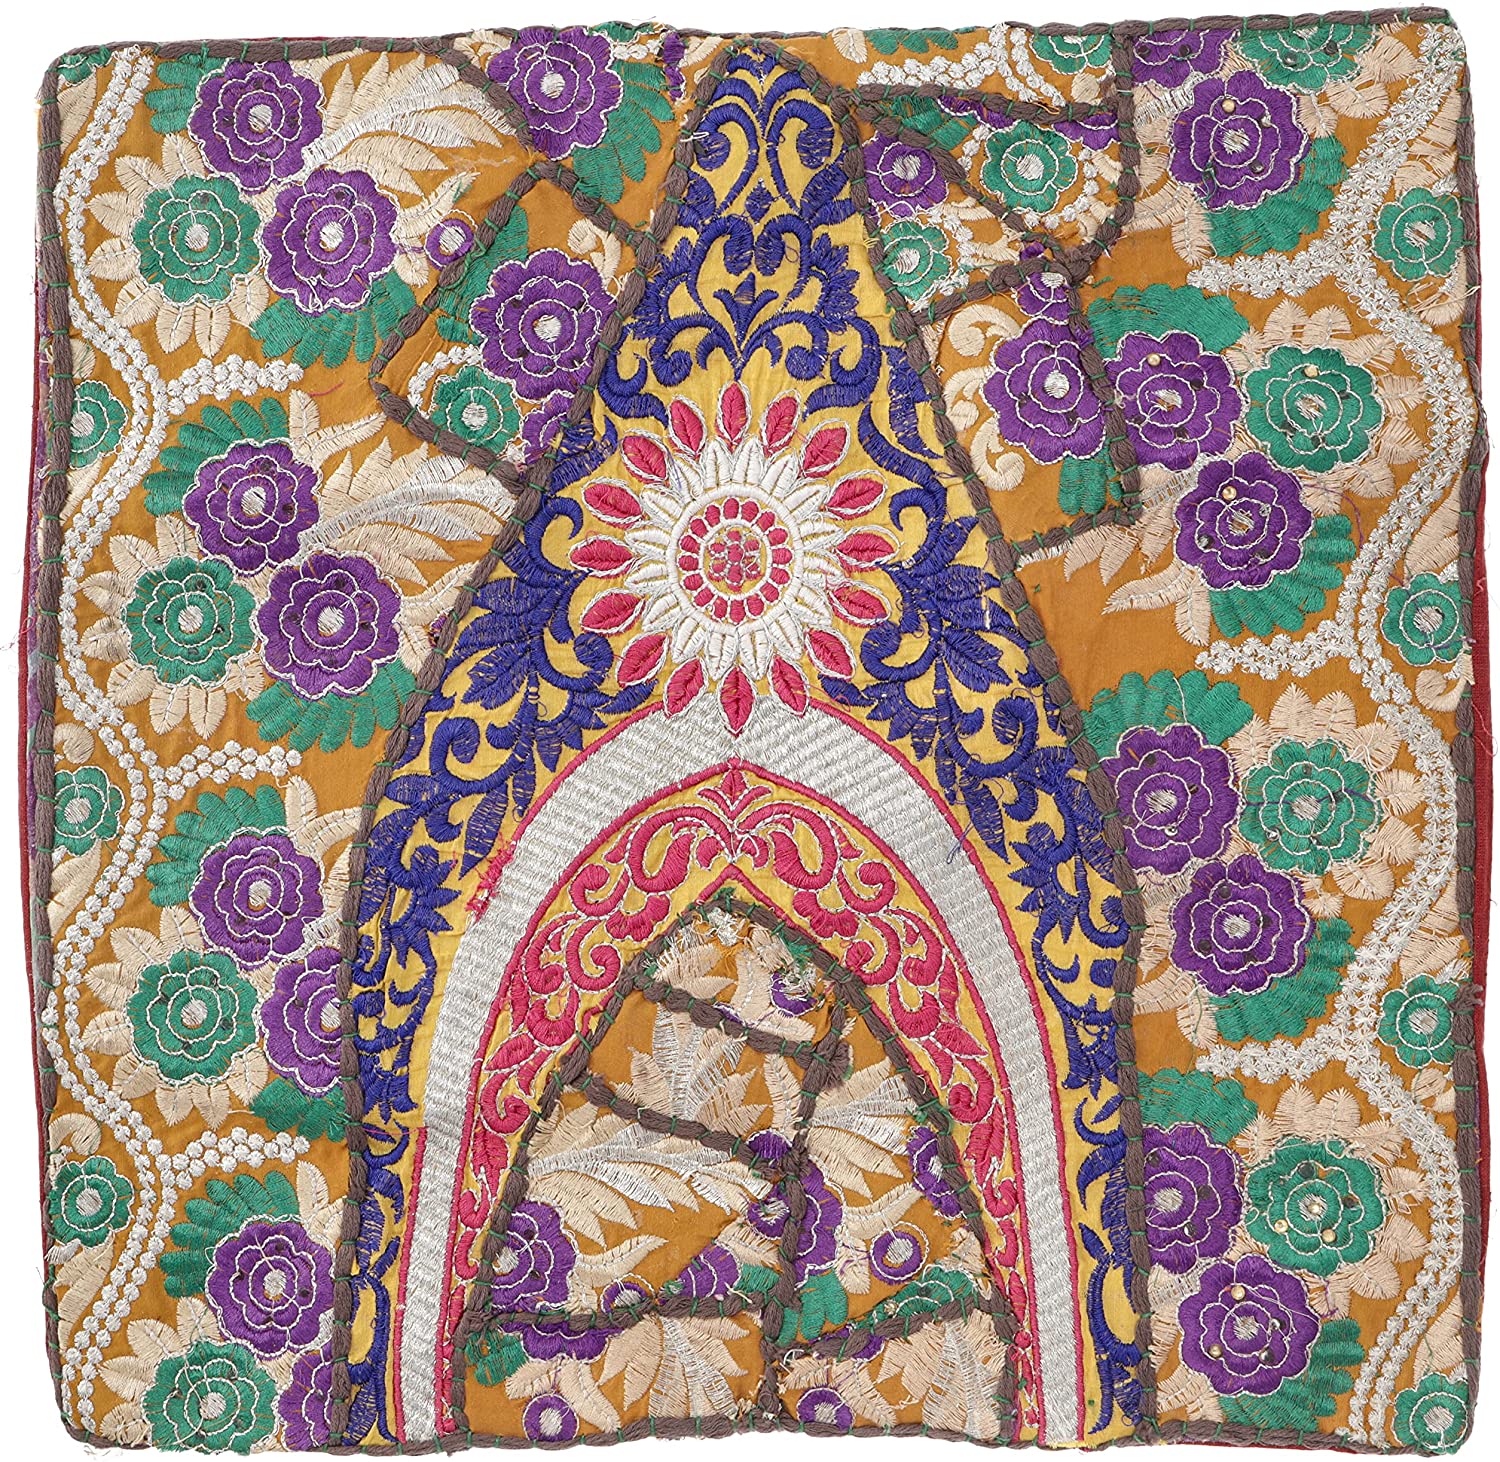 Guru-Shop GURU SHOP Patchwork cushion cover, decorative cushion cover made of Rajasthan, single piece, pattern 65, multi-coloured, cotton, 40 x 40 cm, decorative cushion, sofa cushion